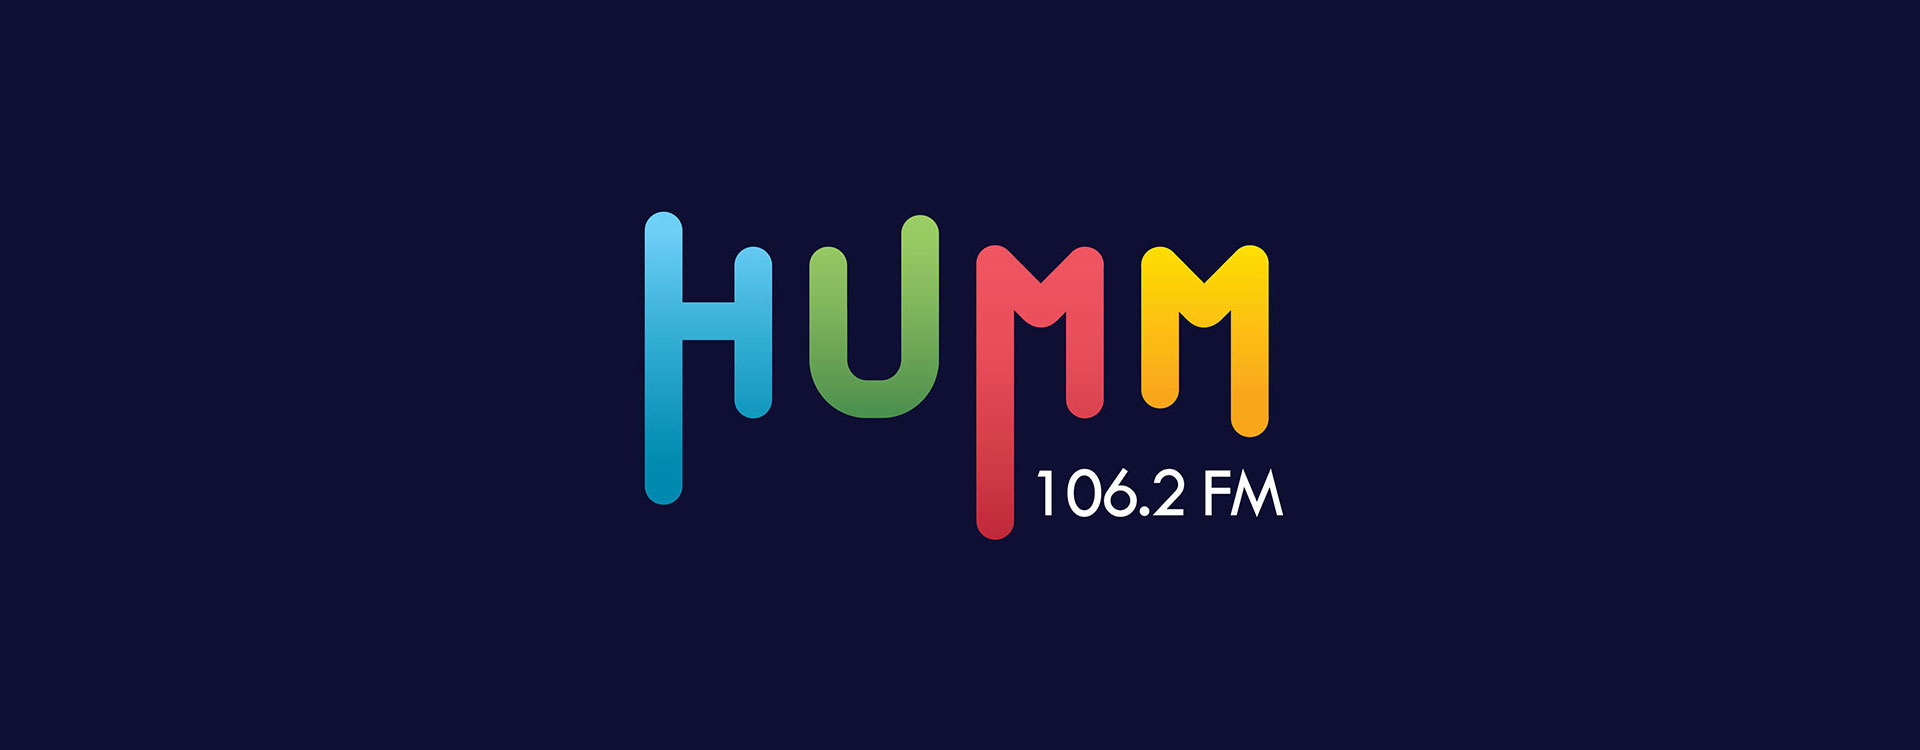 humm fm 106.2 fm - Logo design